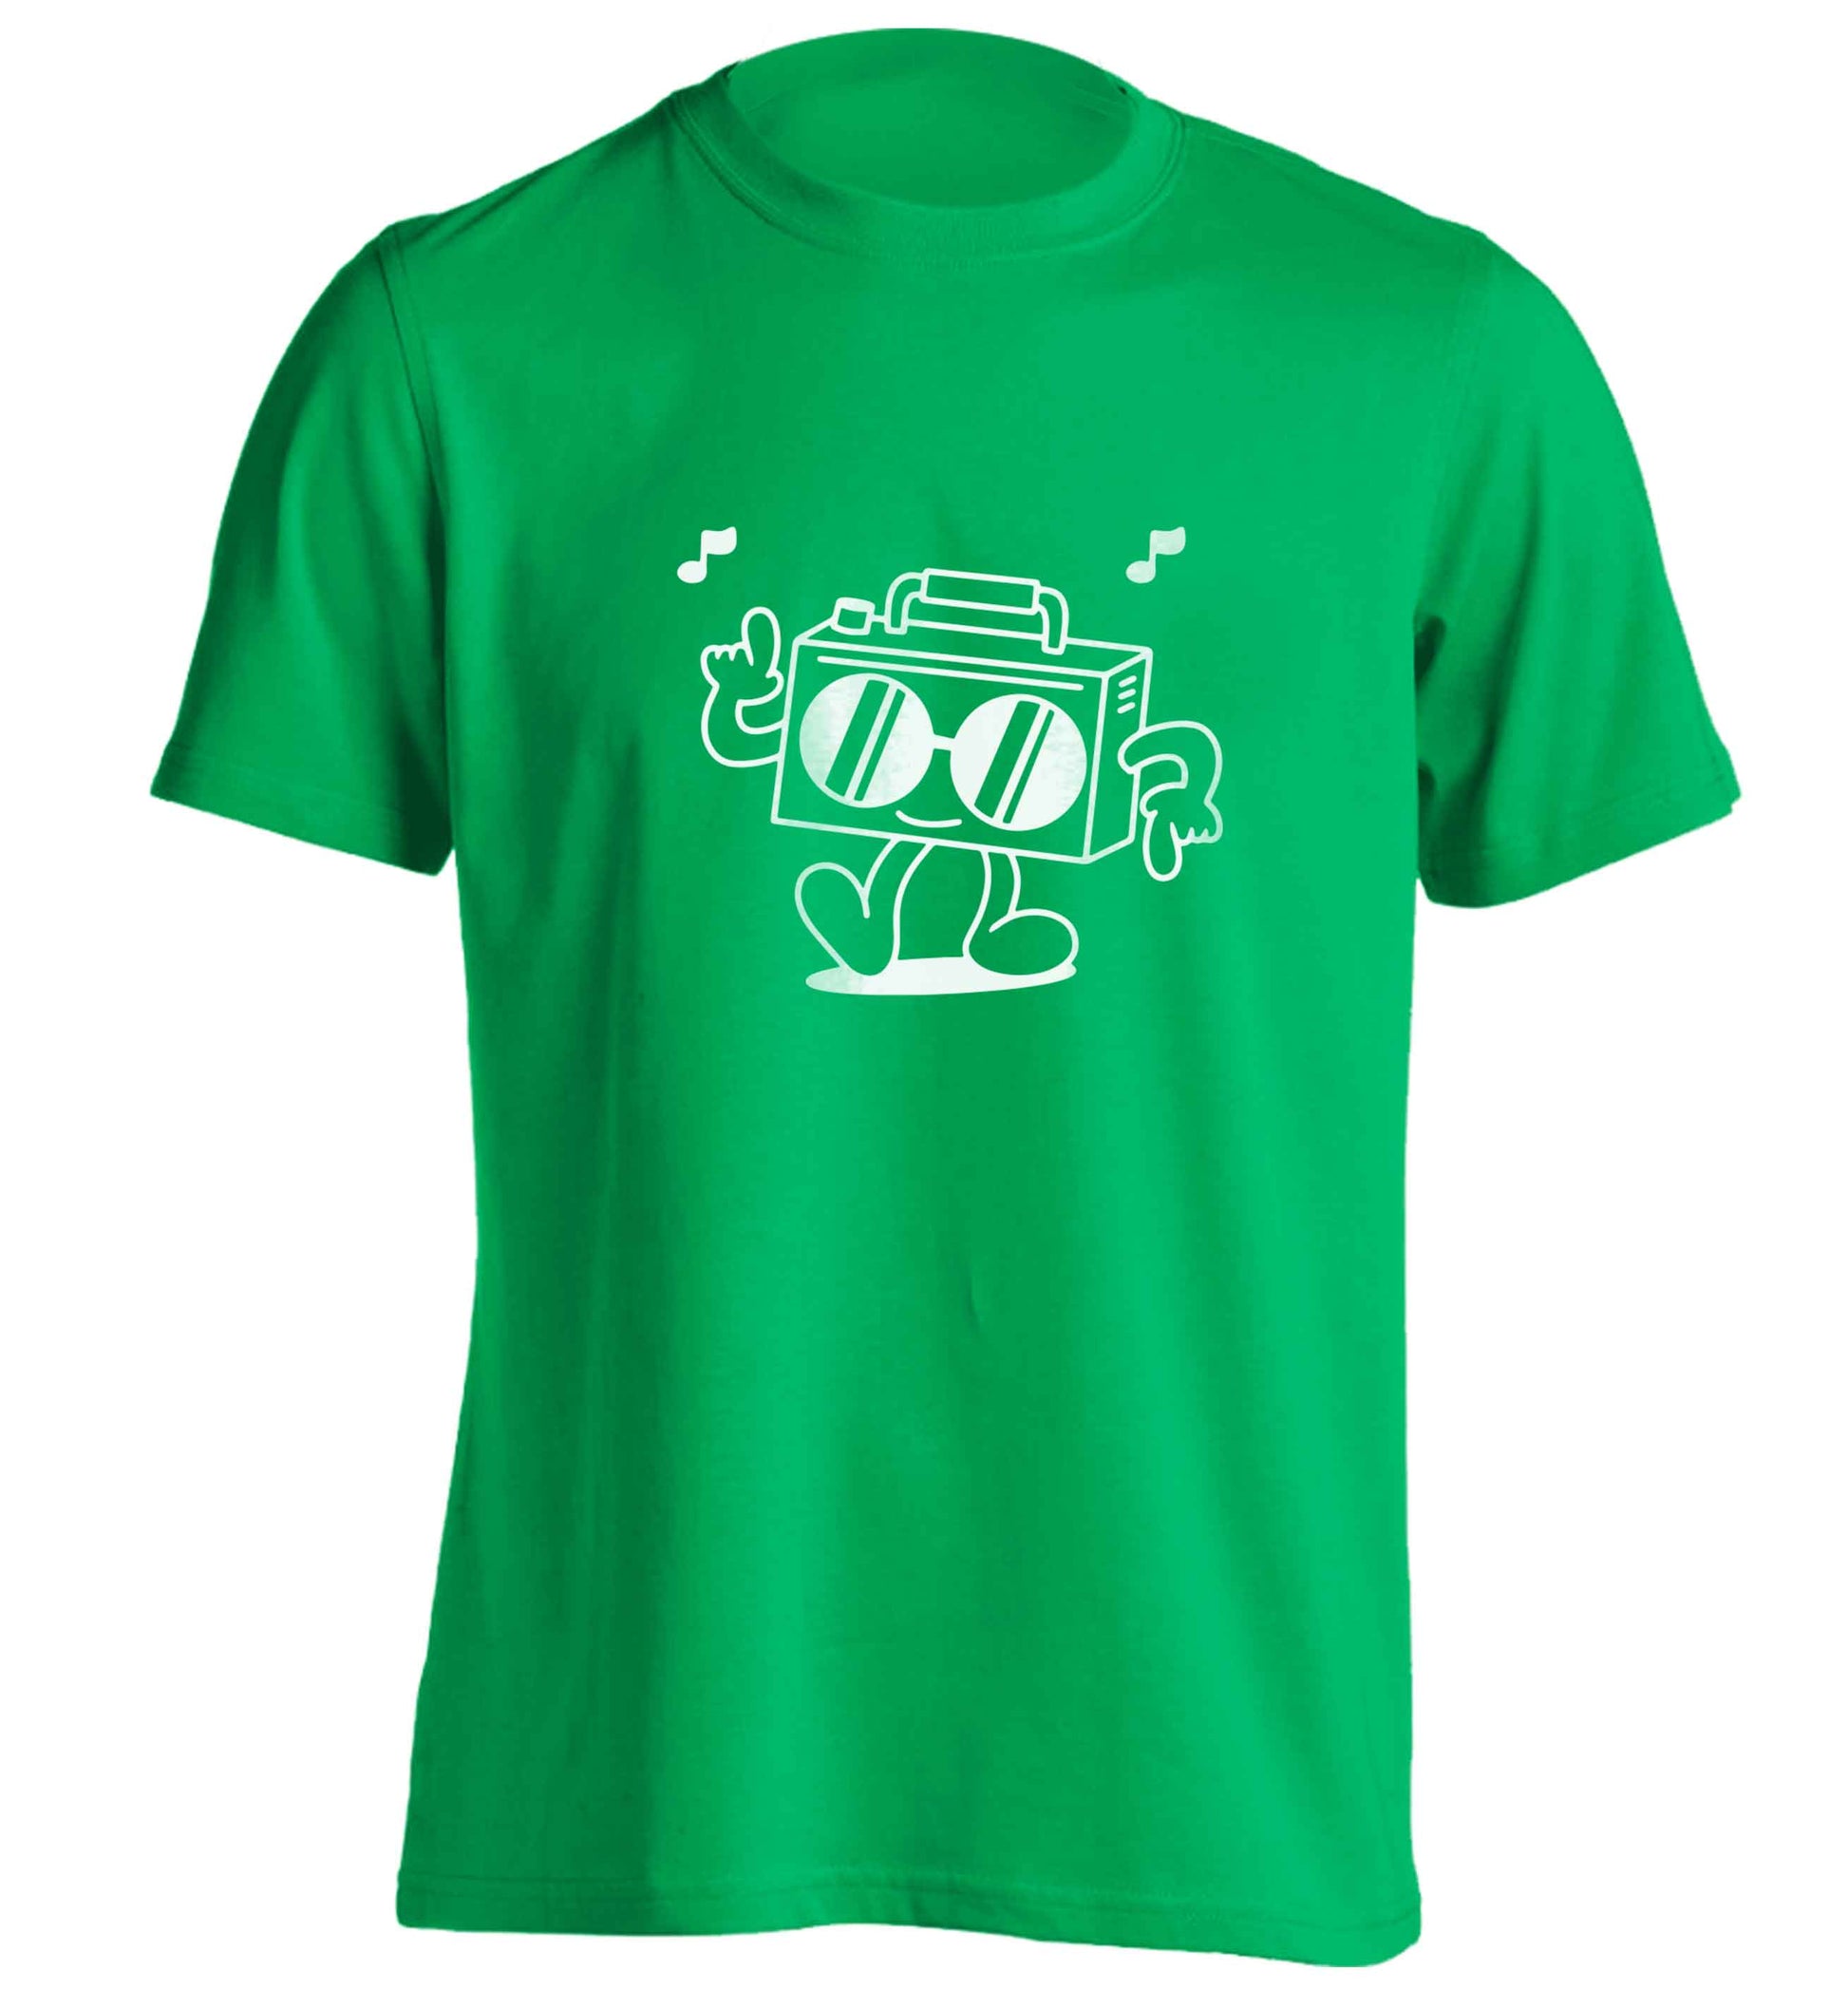 Boombox adults unisex green Tshirt 2XL